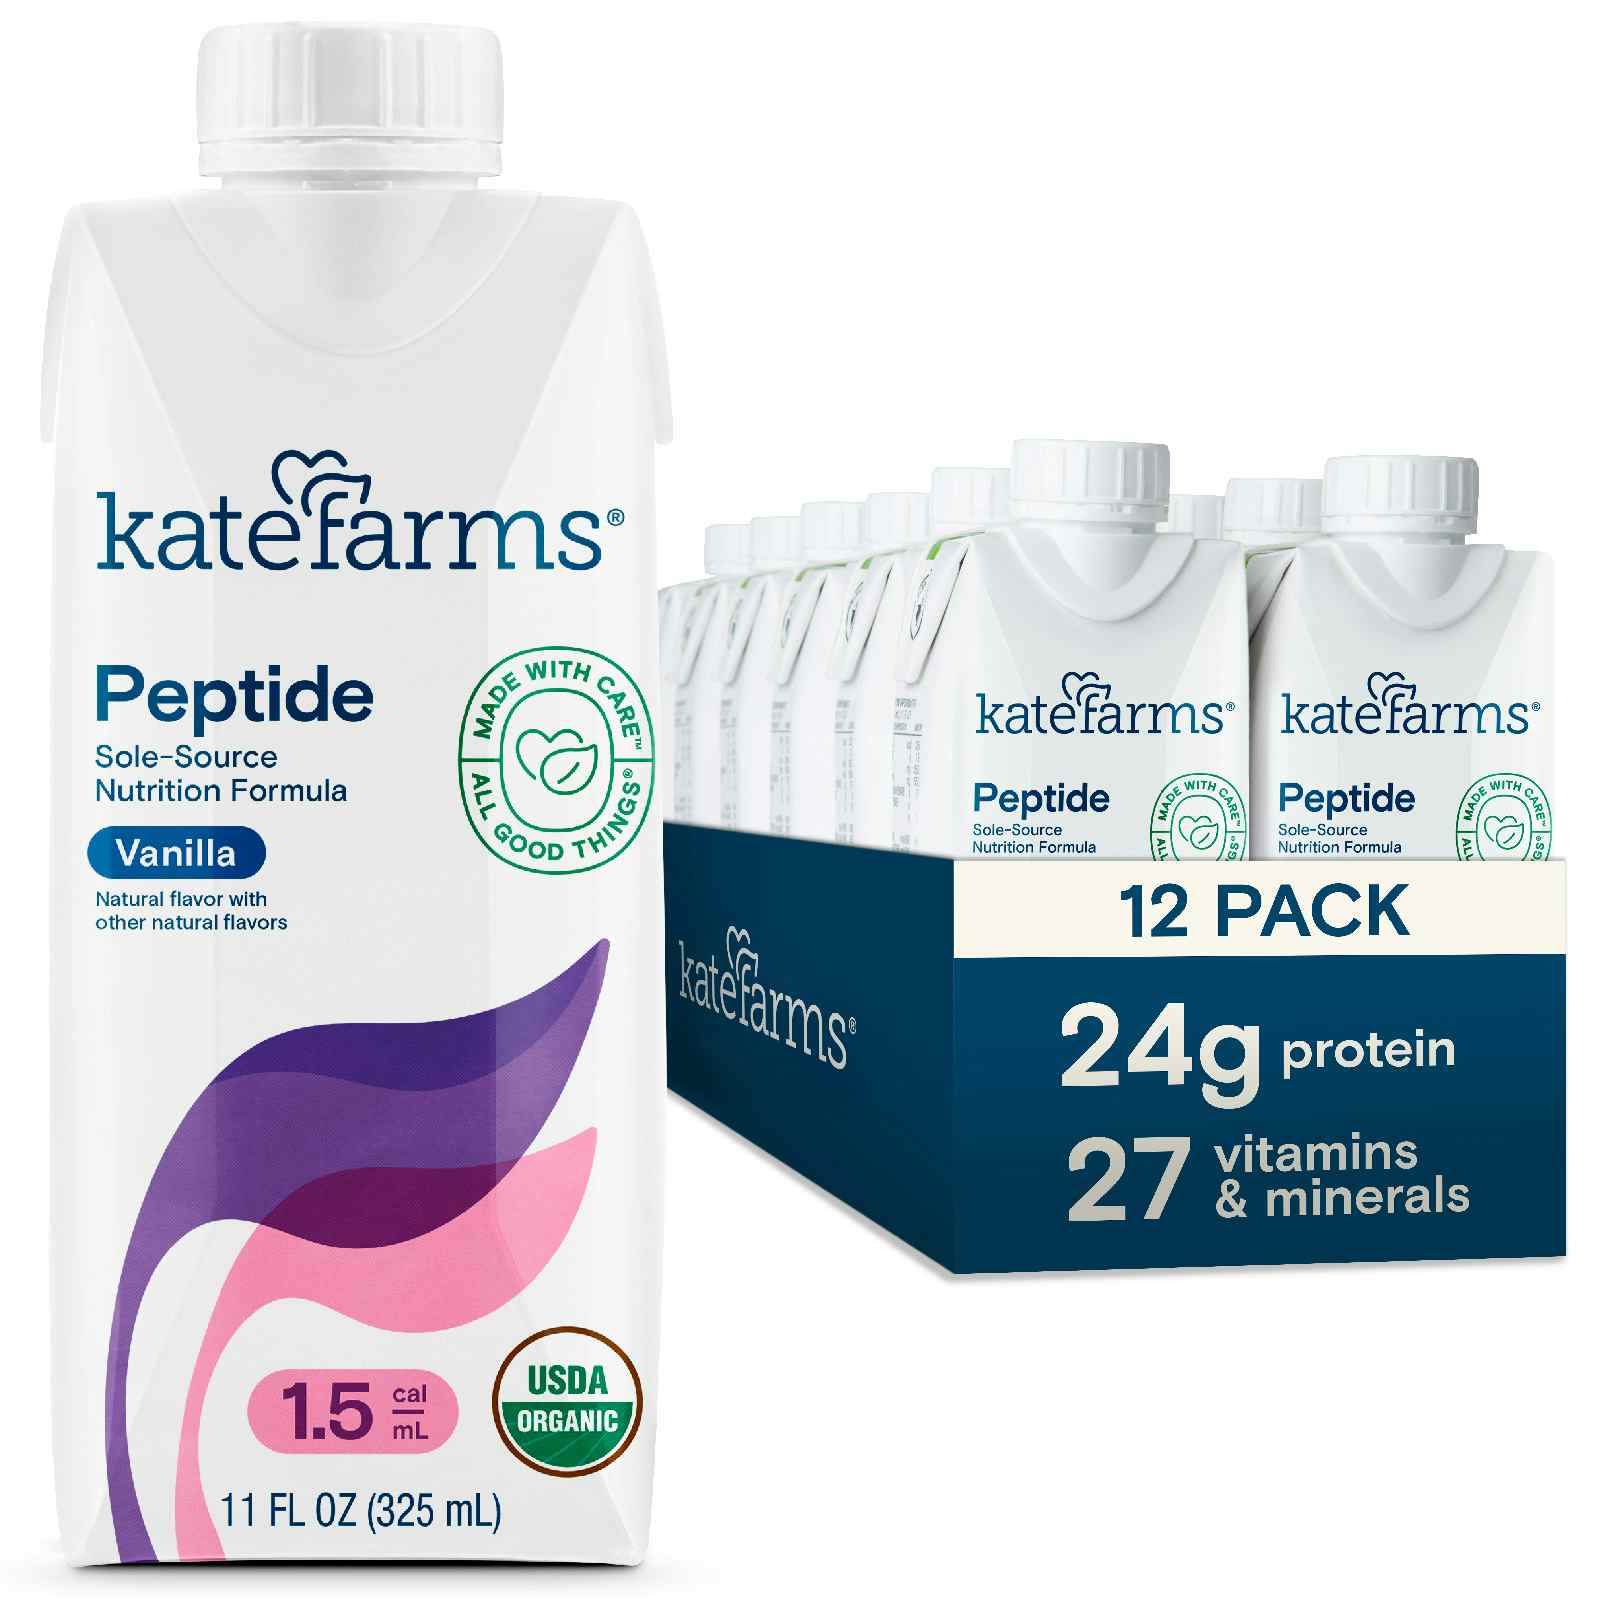 Kate Farms Peptide 1.5 Sole-Source Nutrition Formula, Vanilla, 11 oz.